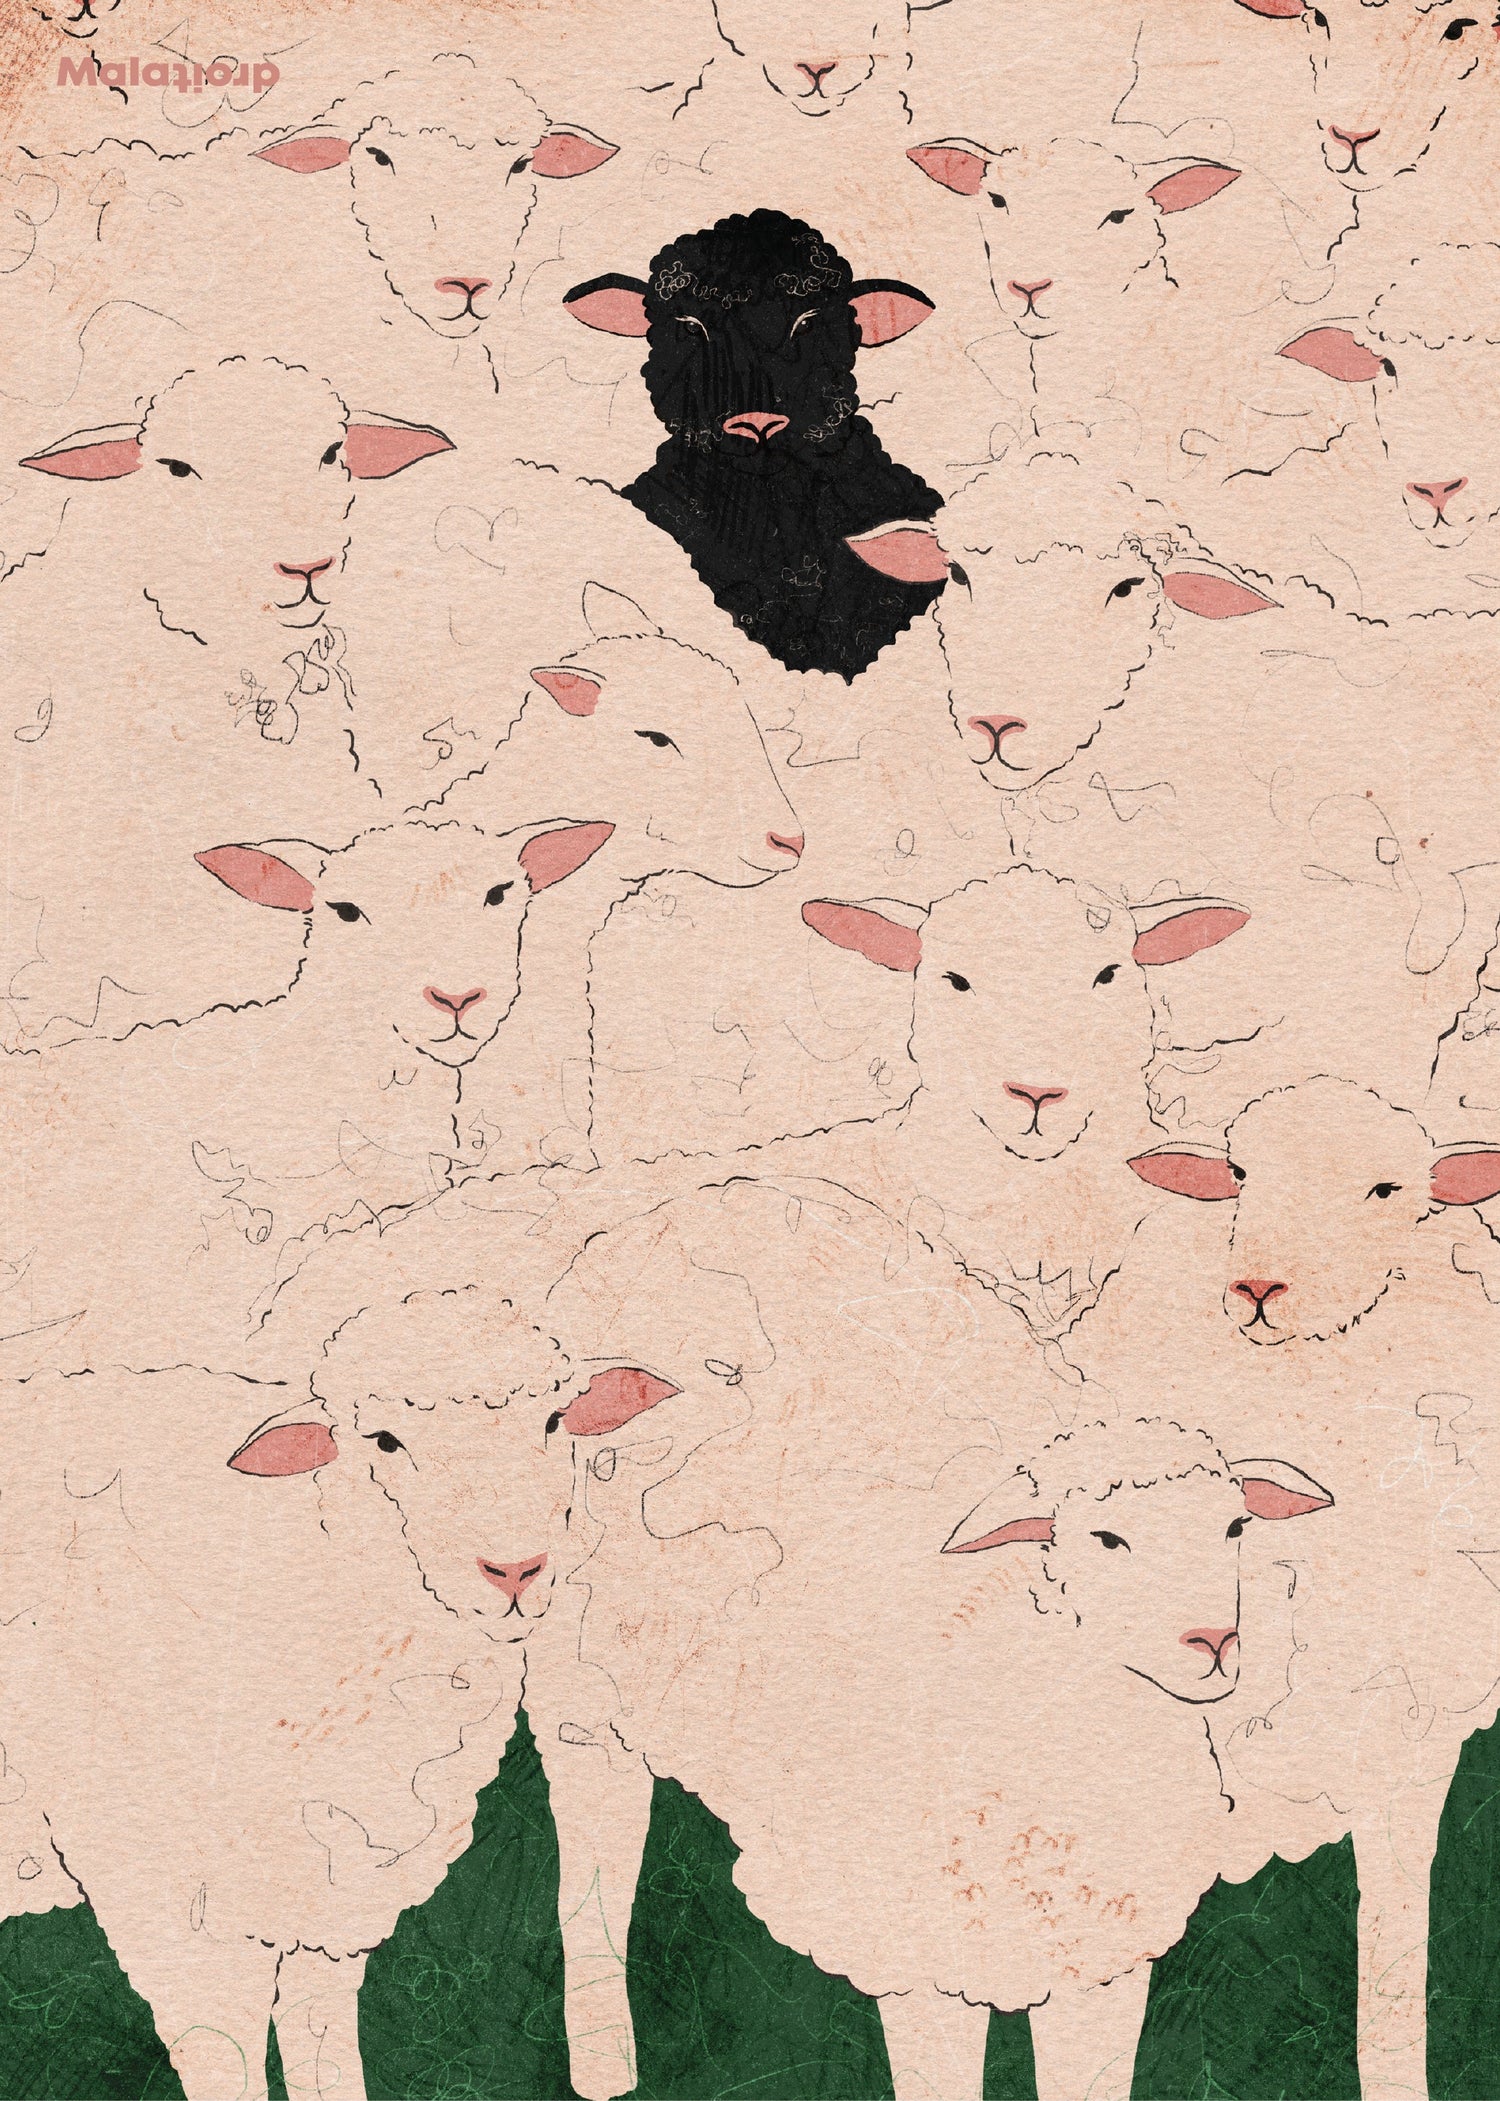 The black sheep